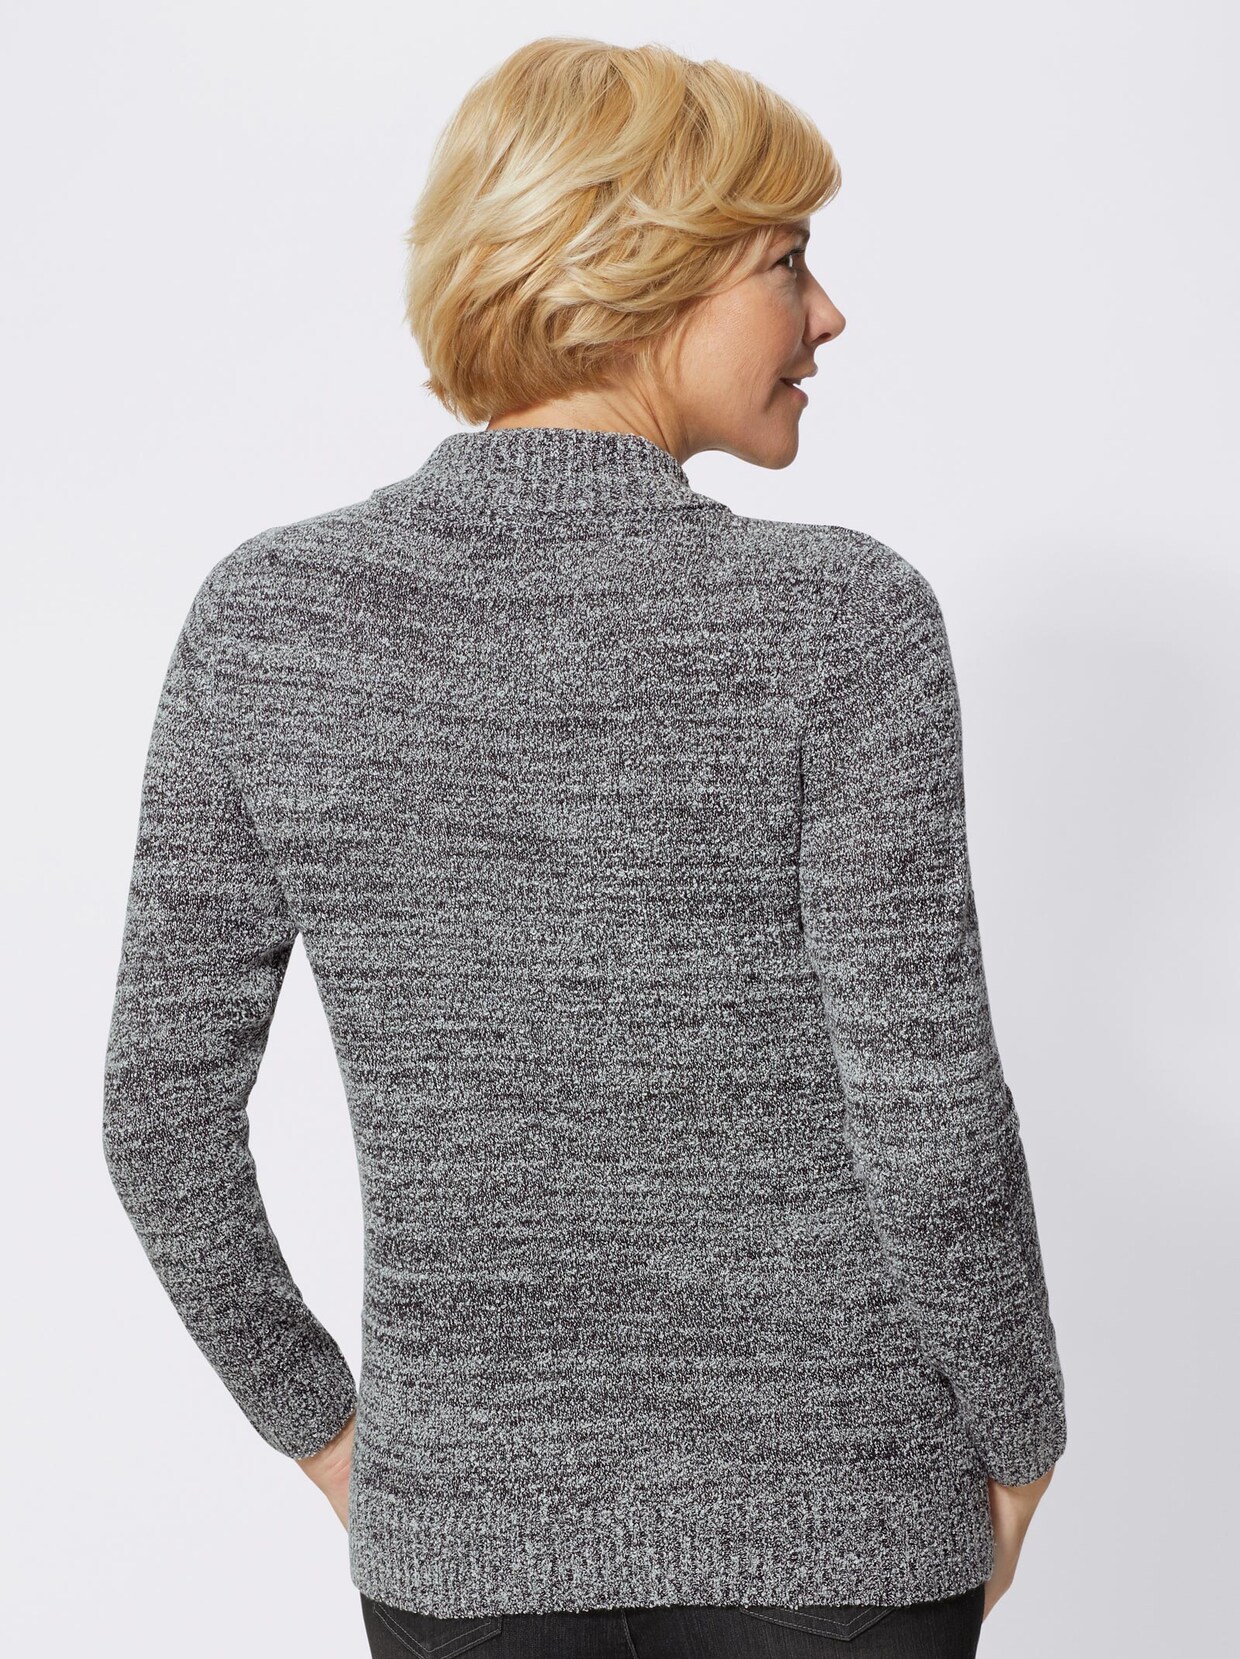 V-Ausschnitt-Pullover - schwarz-weiß-meliert